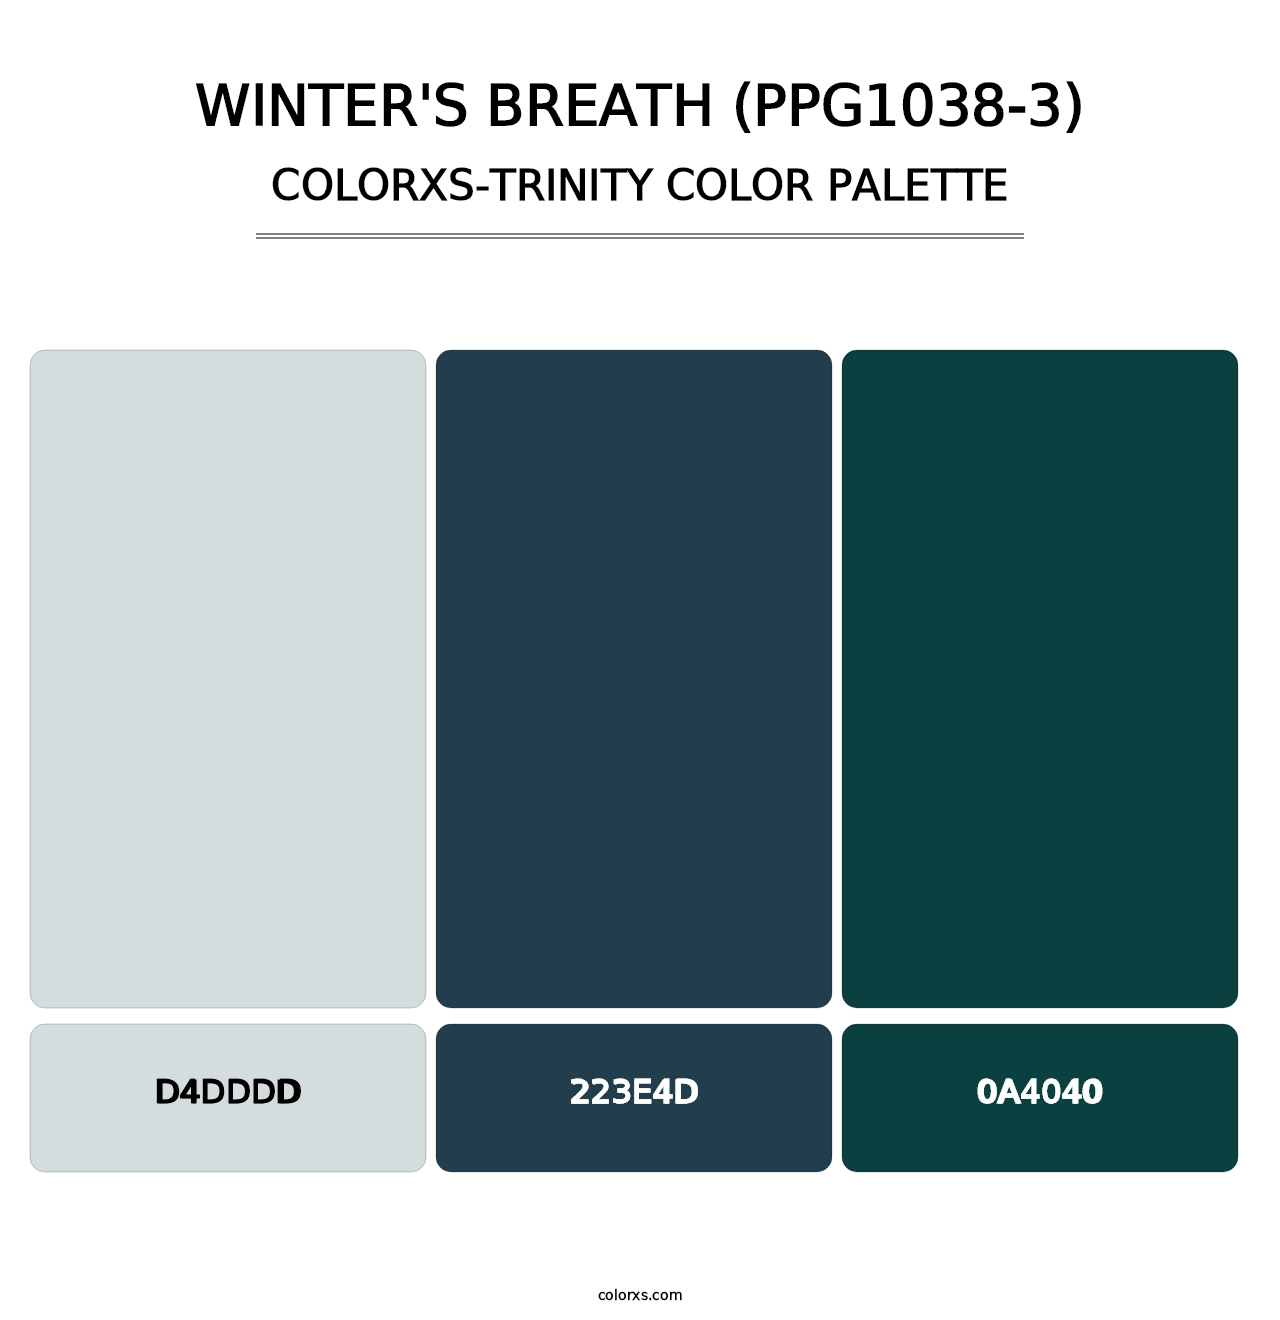 Winter's Breath (PPG1038-3) - Colorxs Trinity Palette